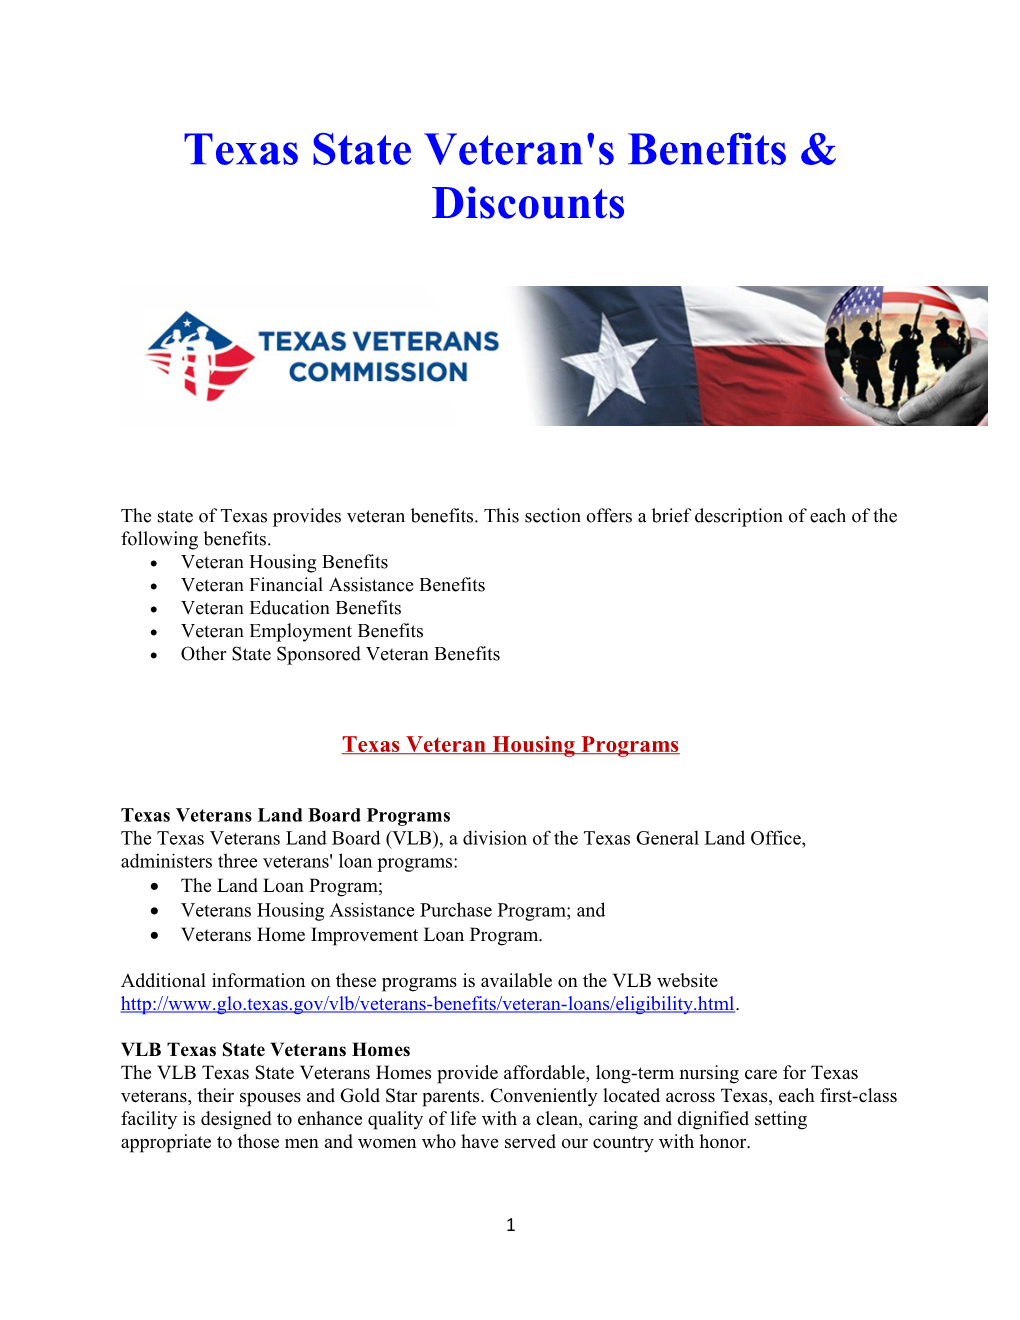 Texas State Veteran's Benefits & Discounts